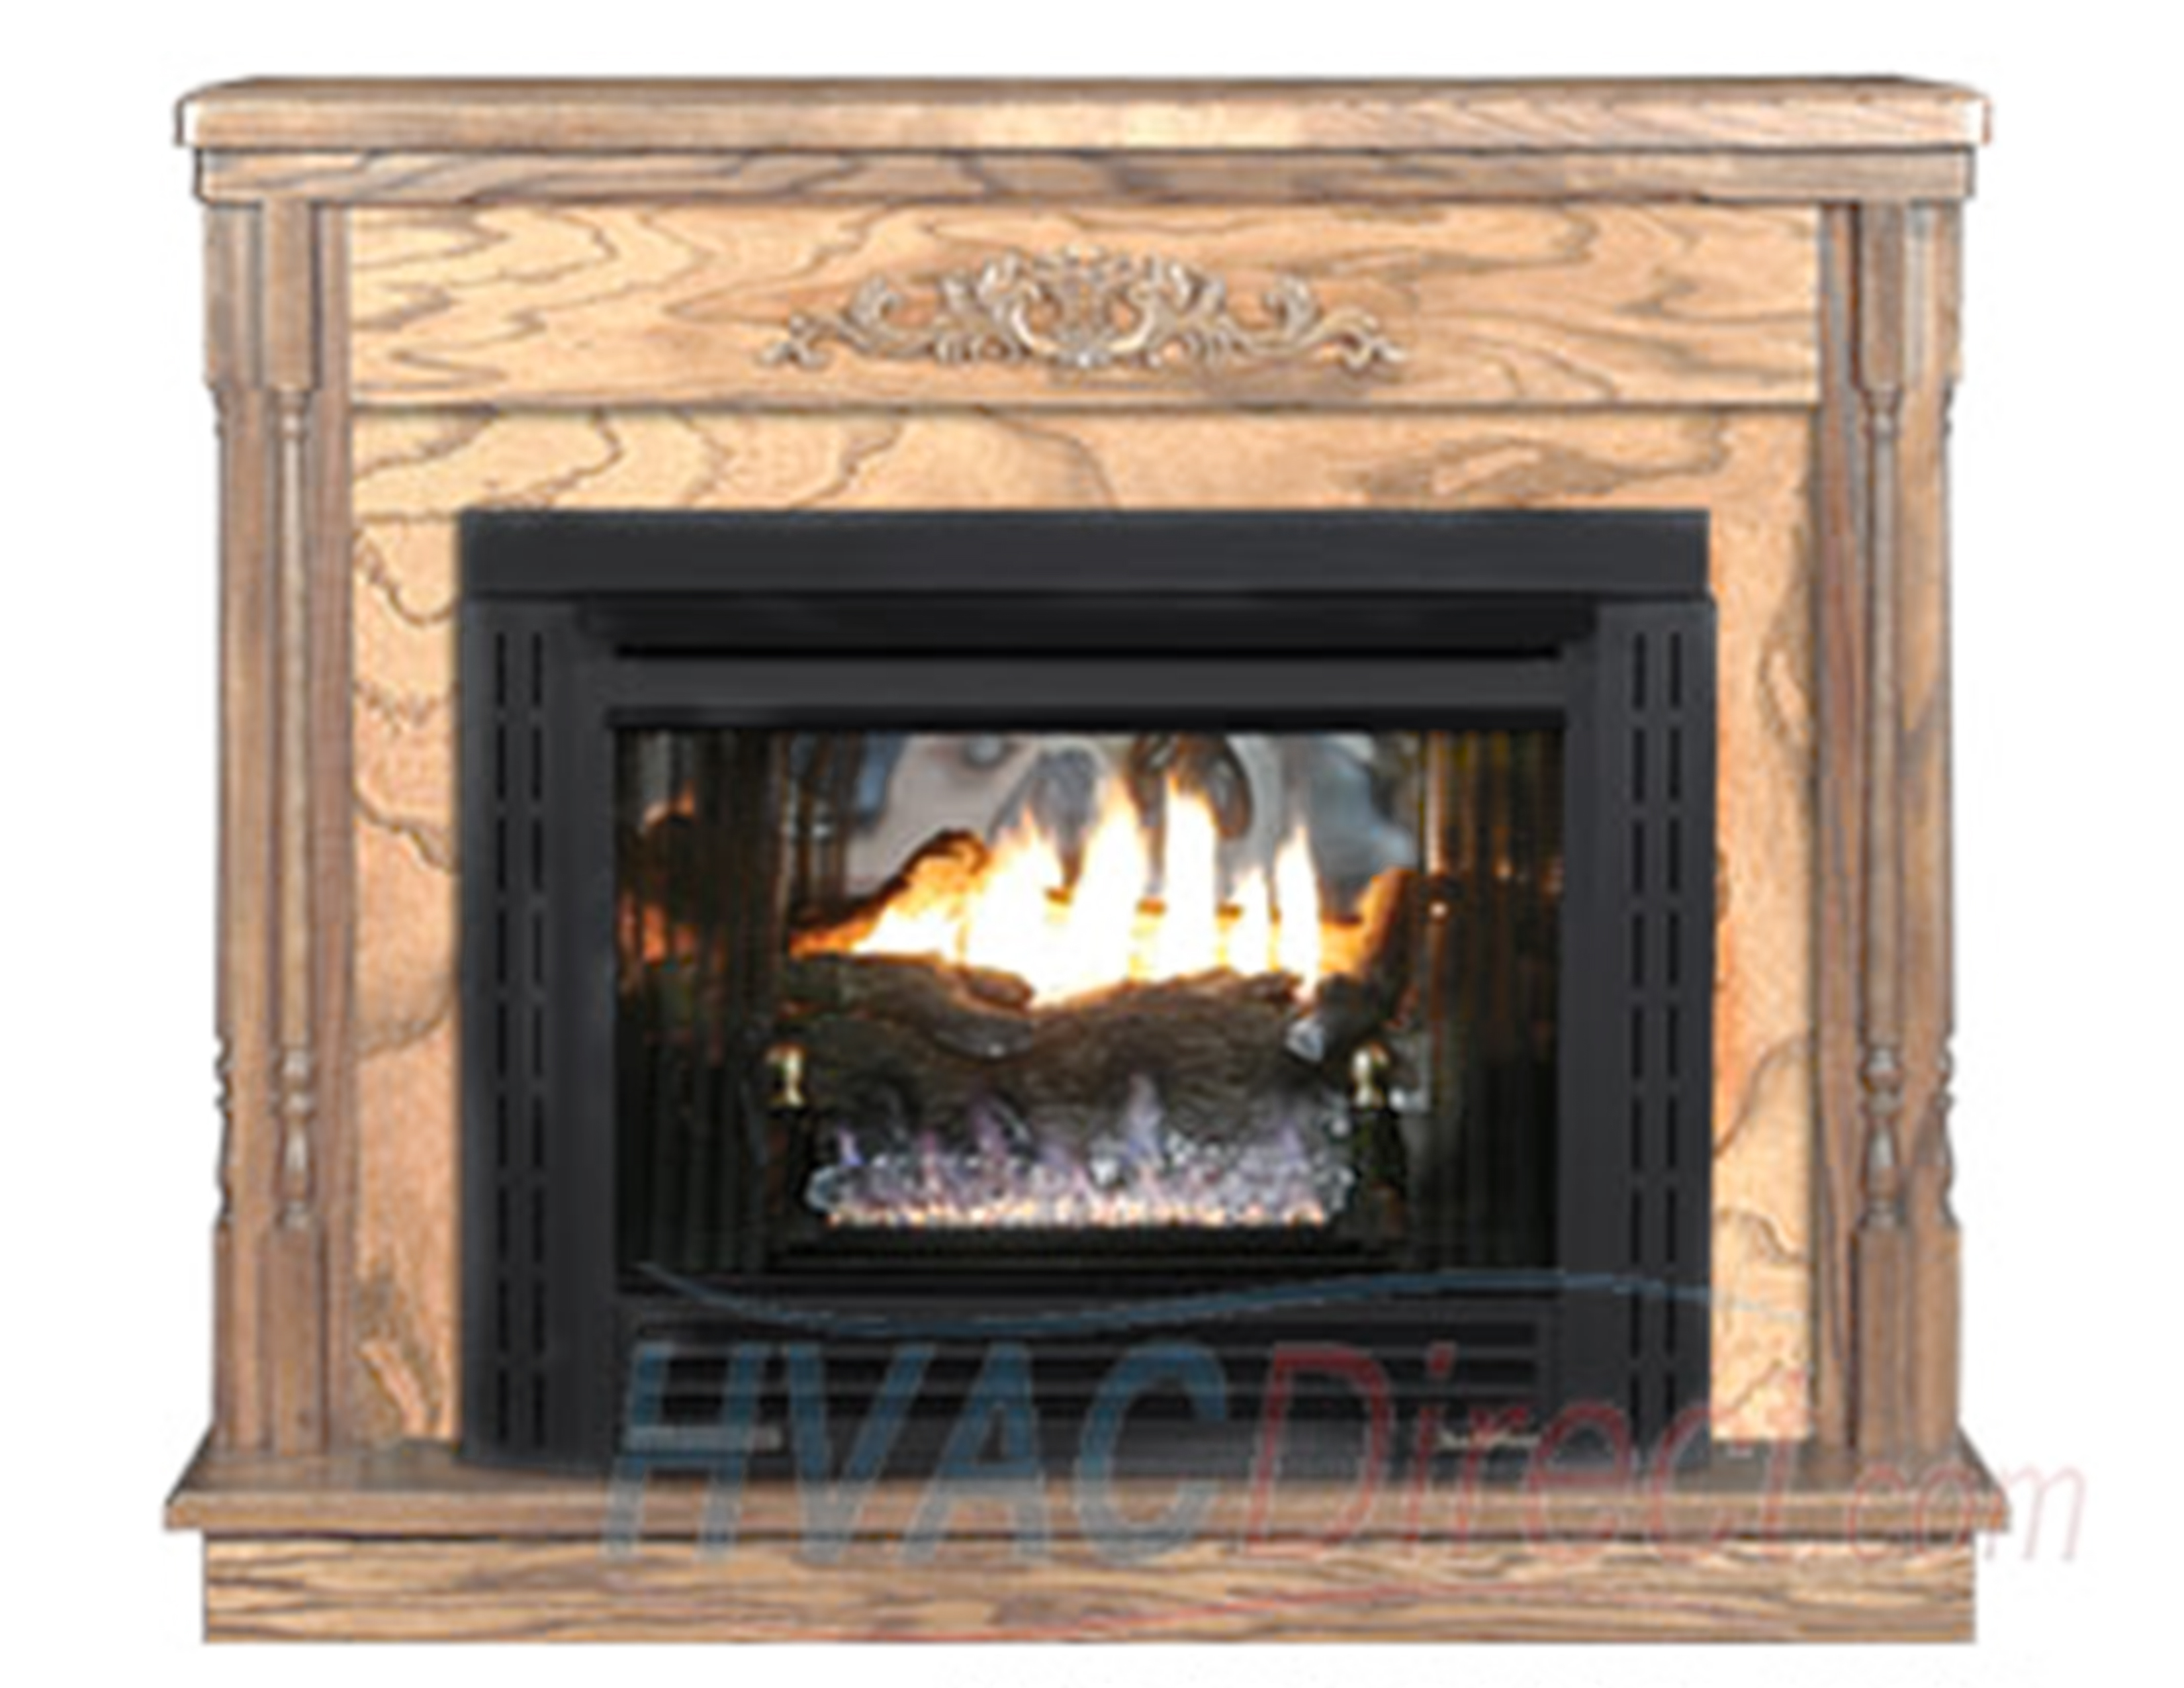 New Gas Fireplace Insert Fresh Buck Stove Model 34zc Vent Free Gas Fireplace